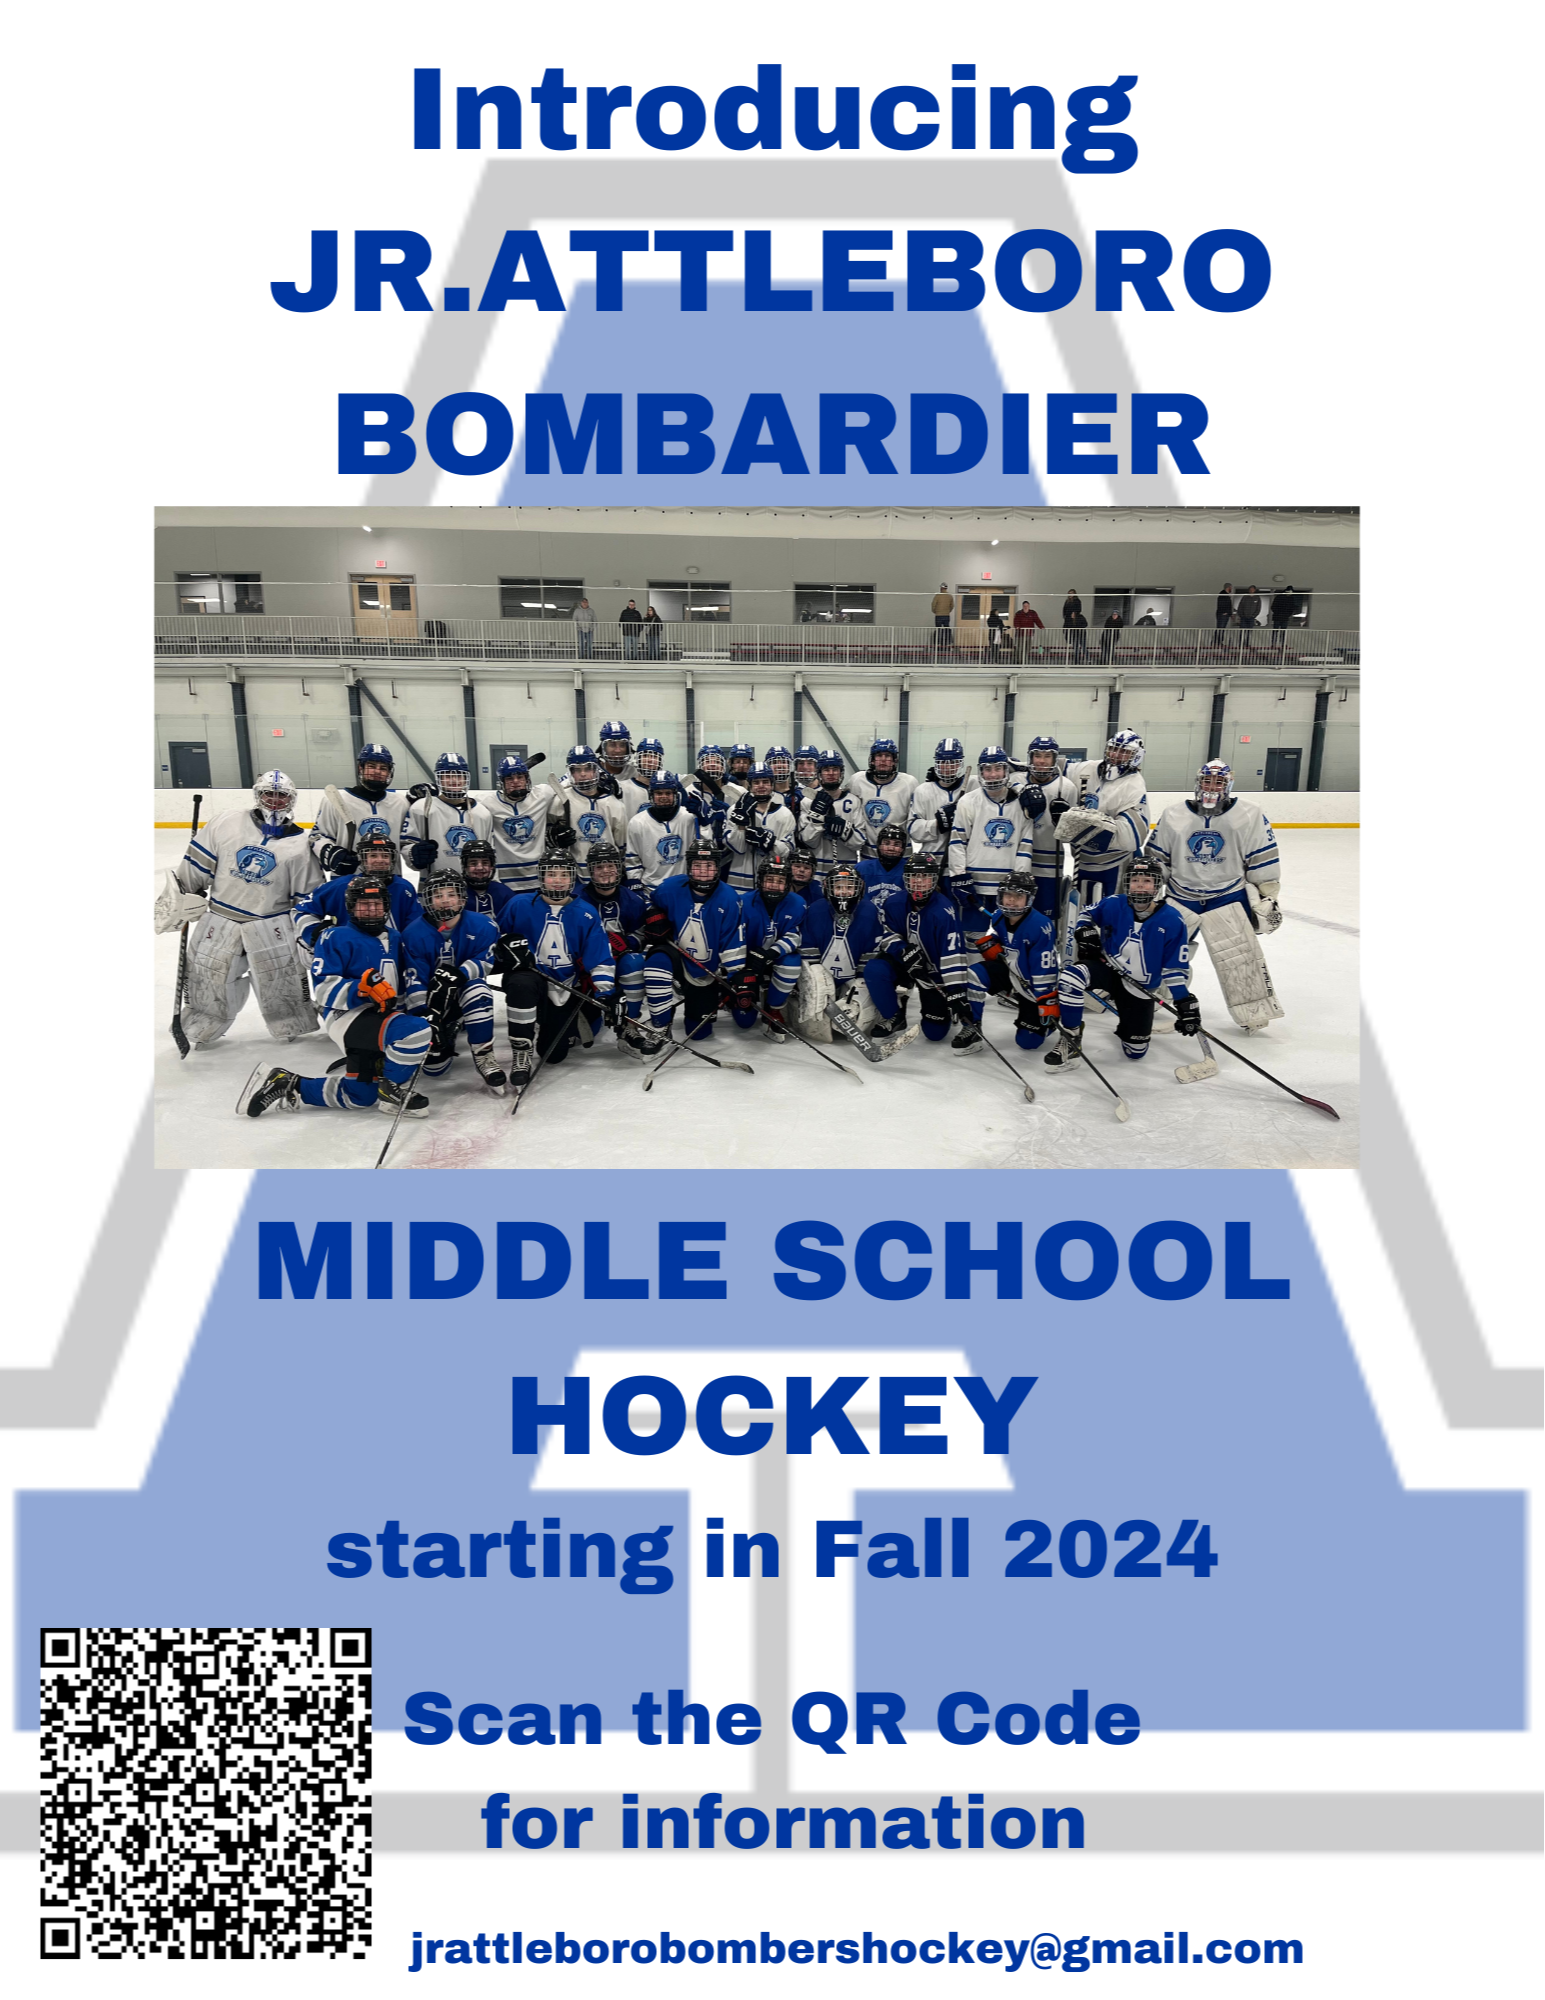 Jr. Attleboro Bombardier MS Hockey